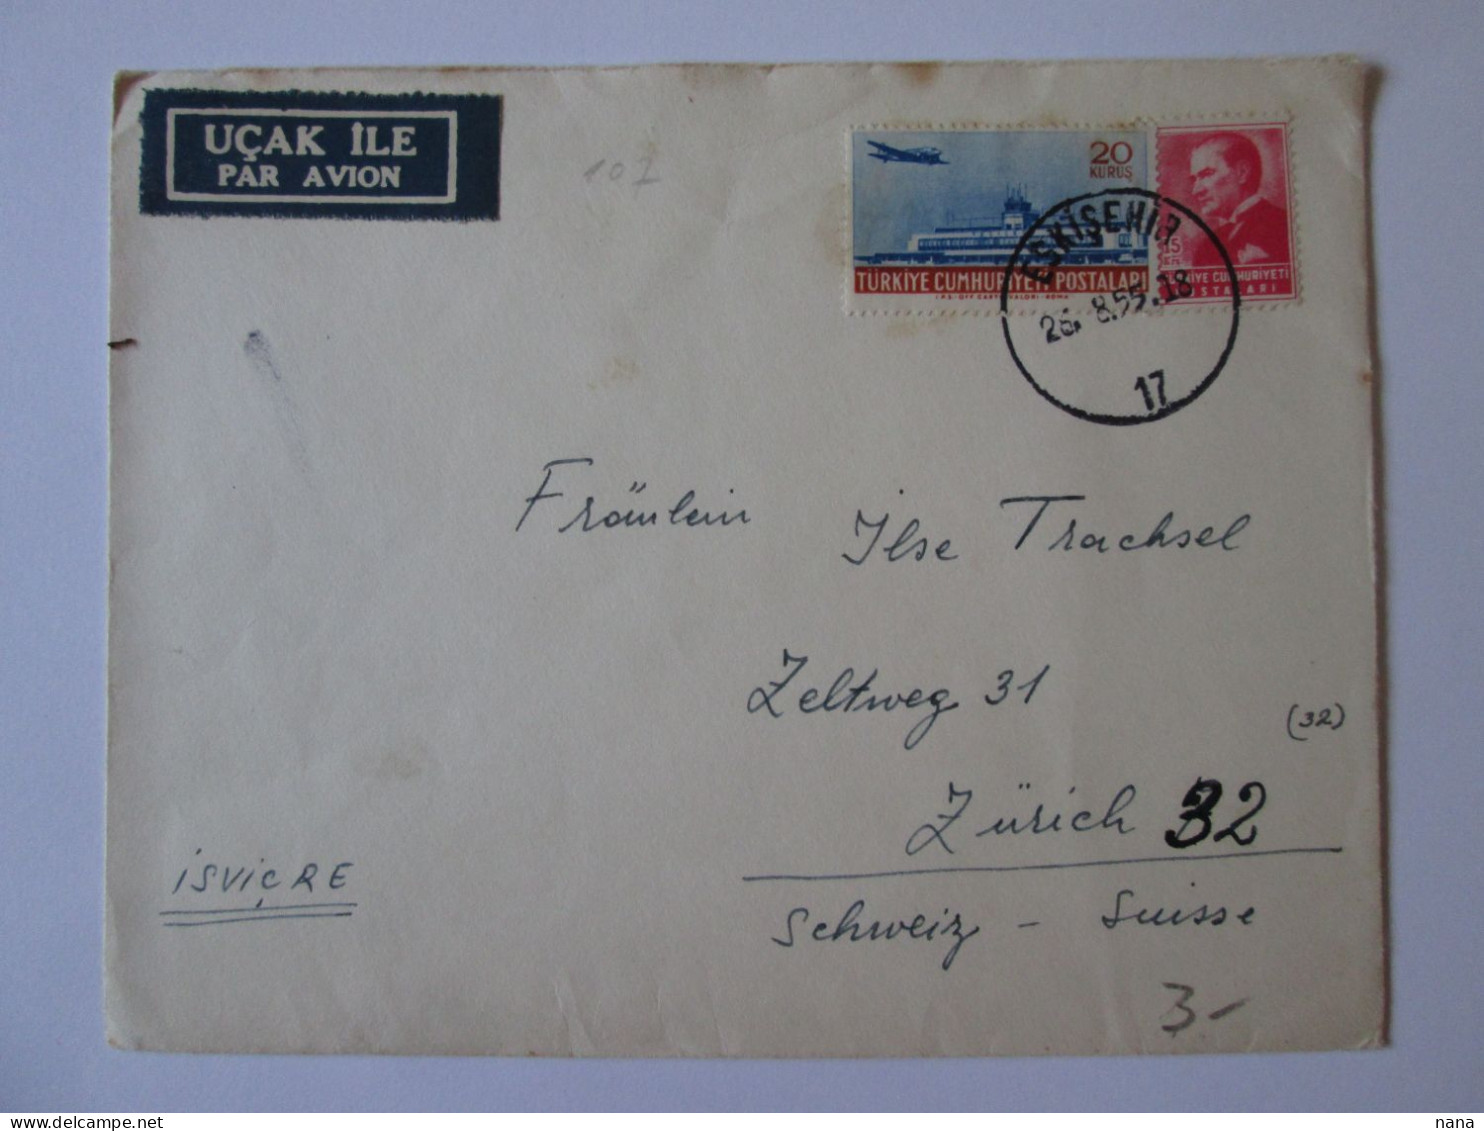 Turquie/Turkey-Eskișehir Enveloppe Recommandee Par Avion 1955/Registered Cover Air Mail 1955 - Cartas & Documentos